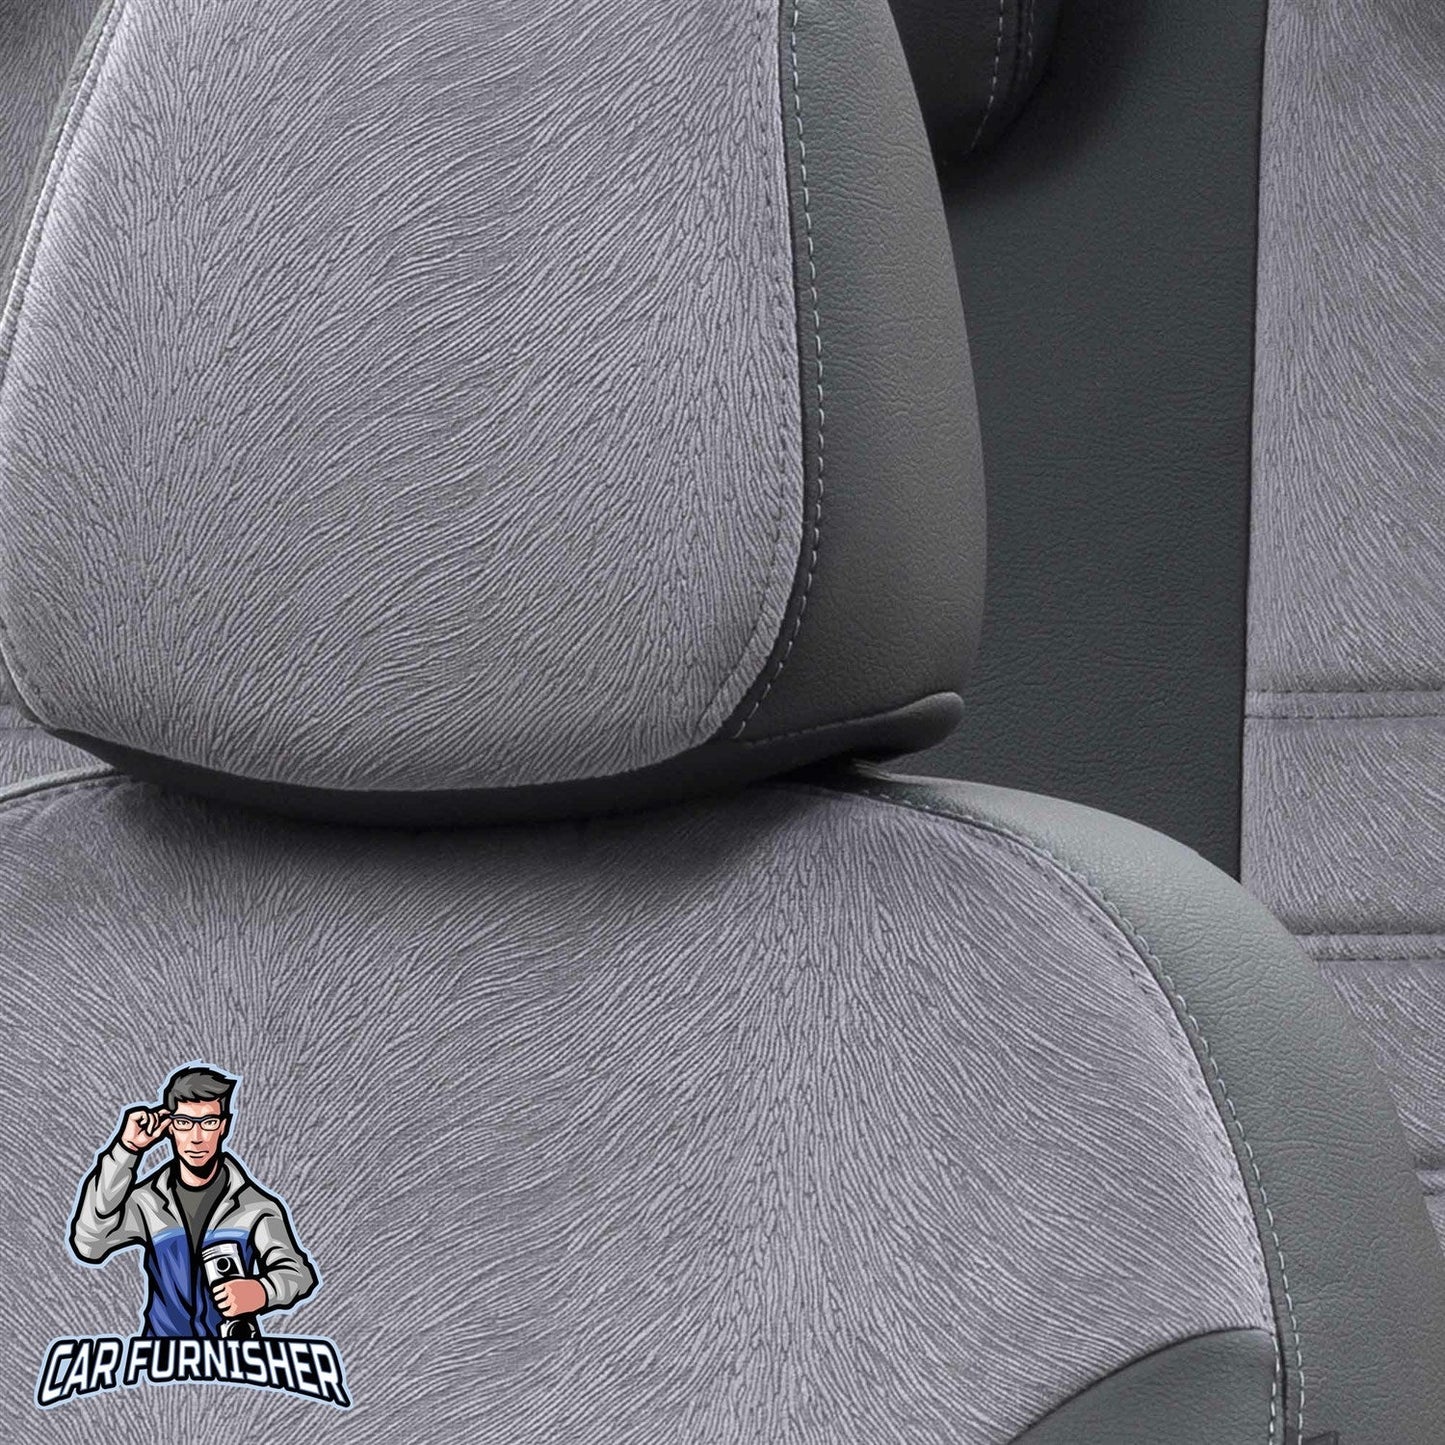 Suzuki Jimny Seat Covers London Foal Feather Design Smoked Black Leather & Foal Feather